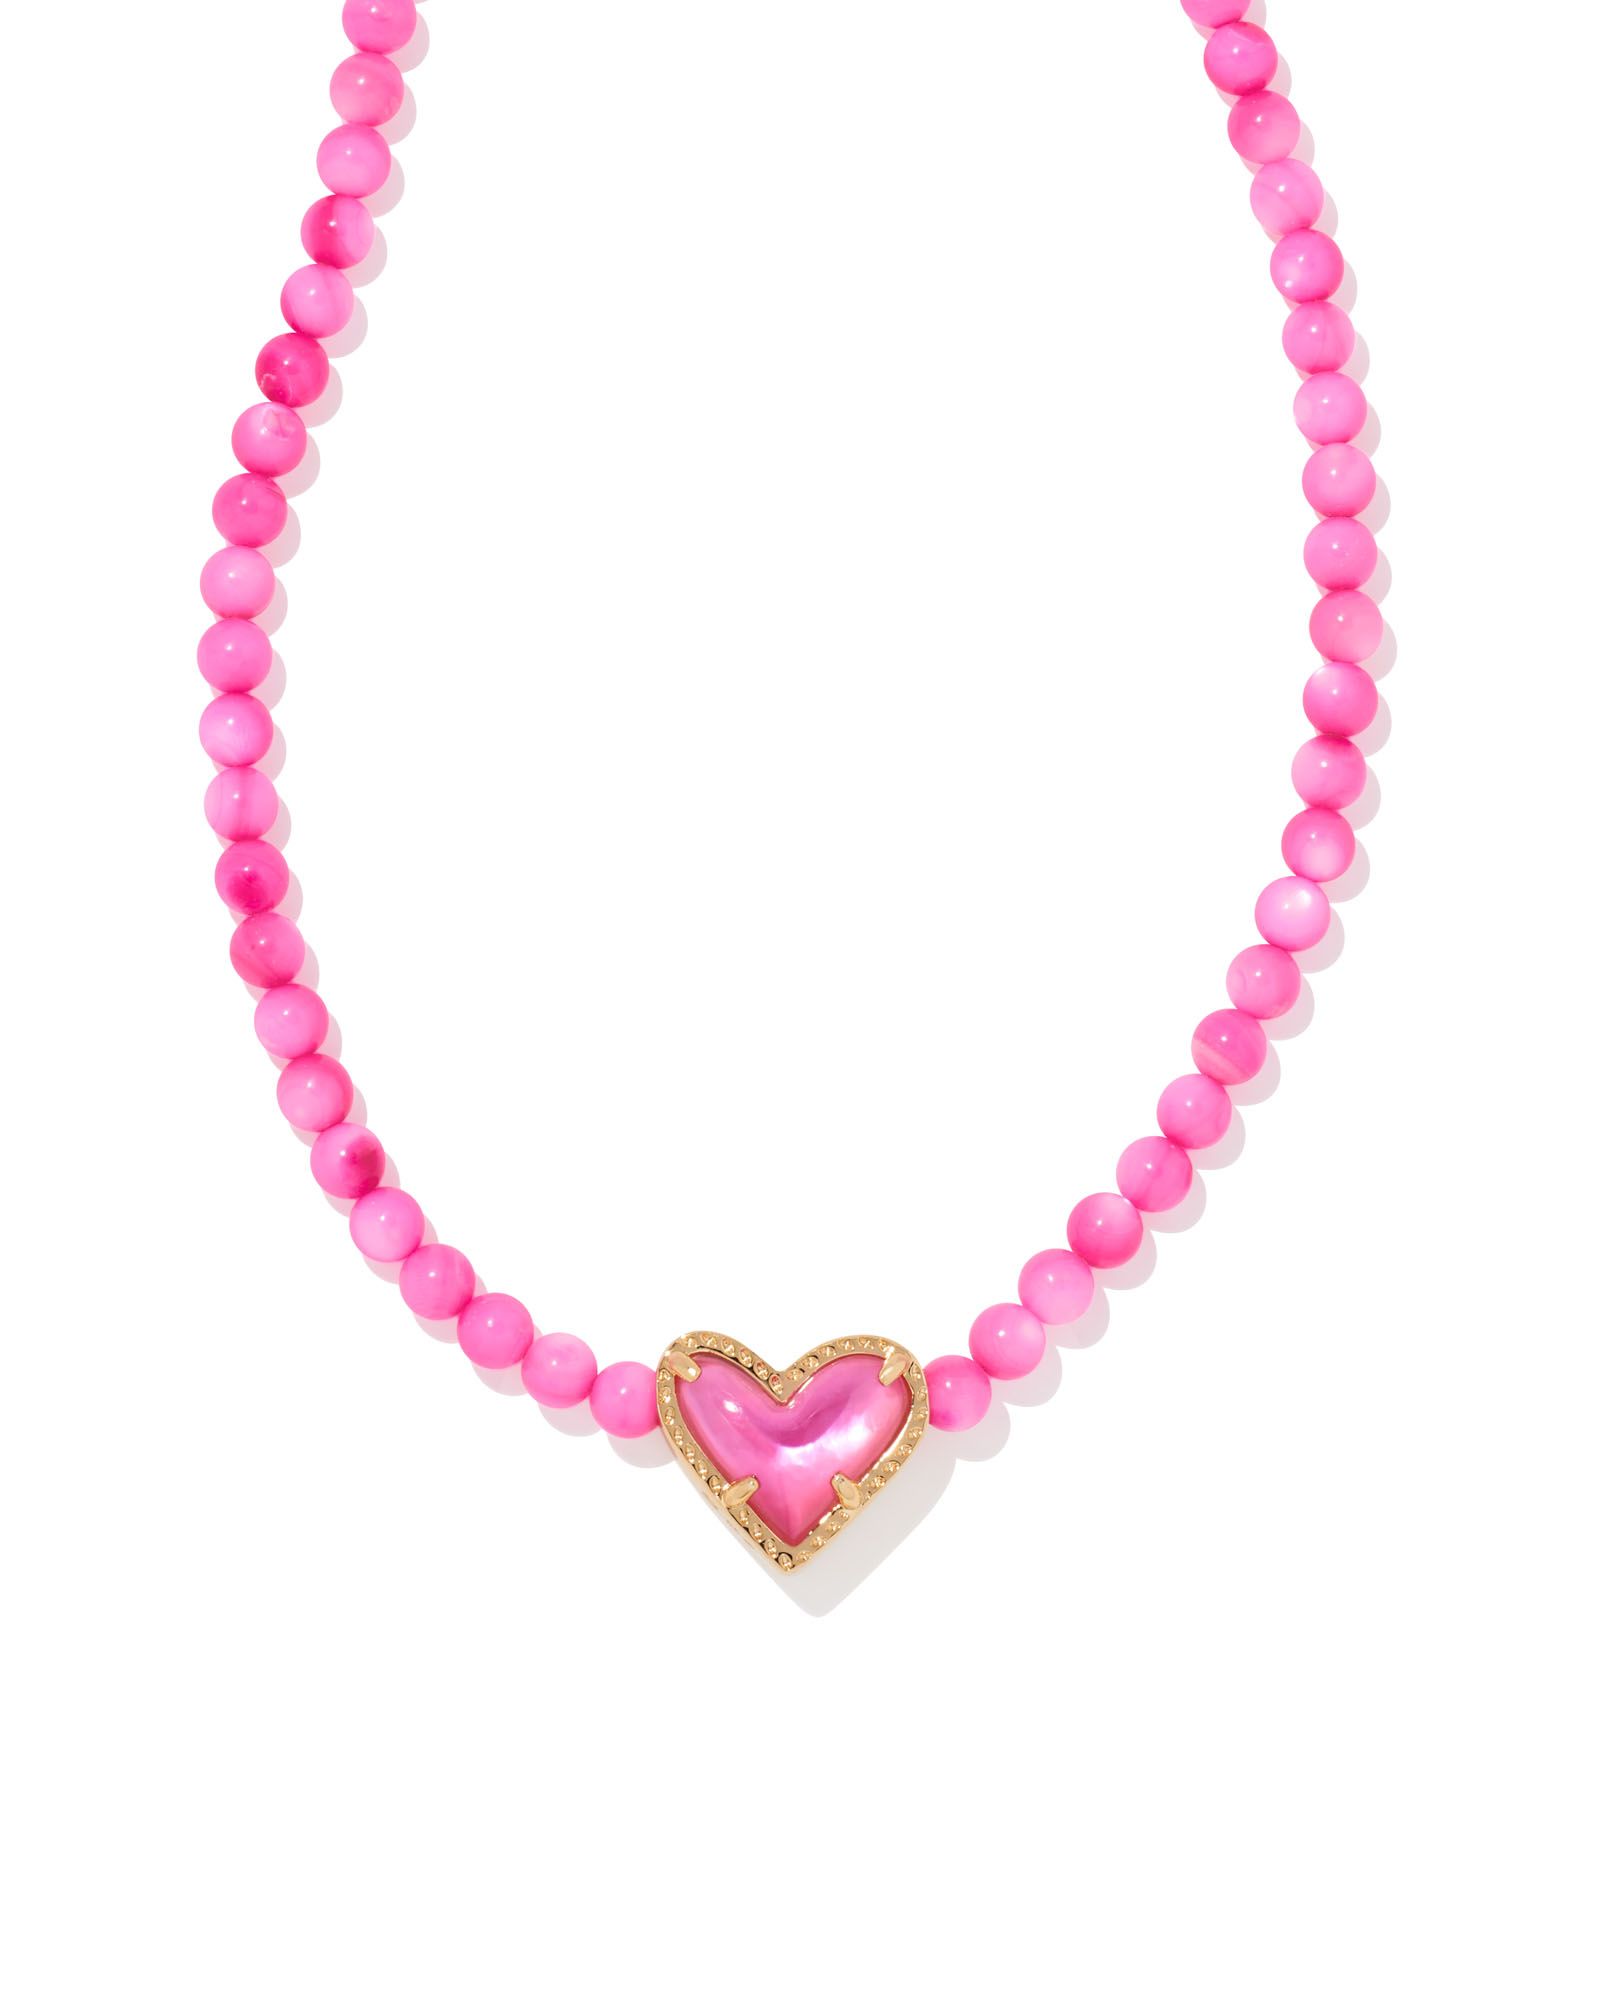 Beaded Ari Gold Necklace in Pink Mix | Kendra Scott | Kendra Scott